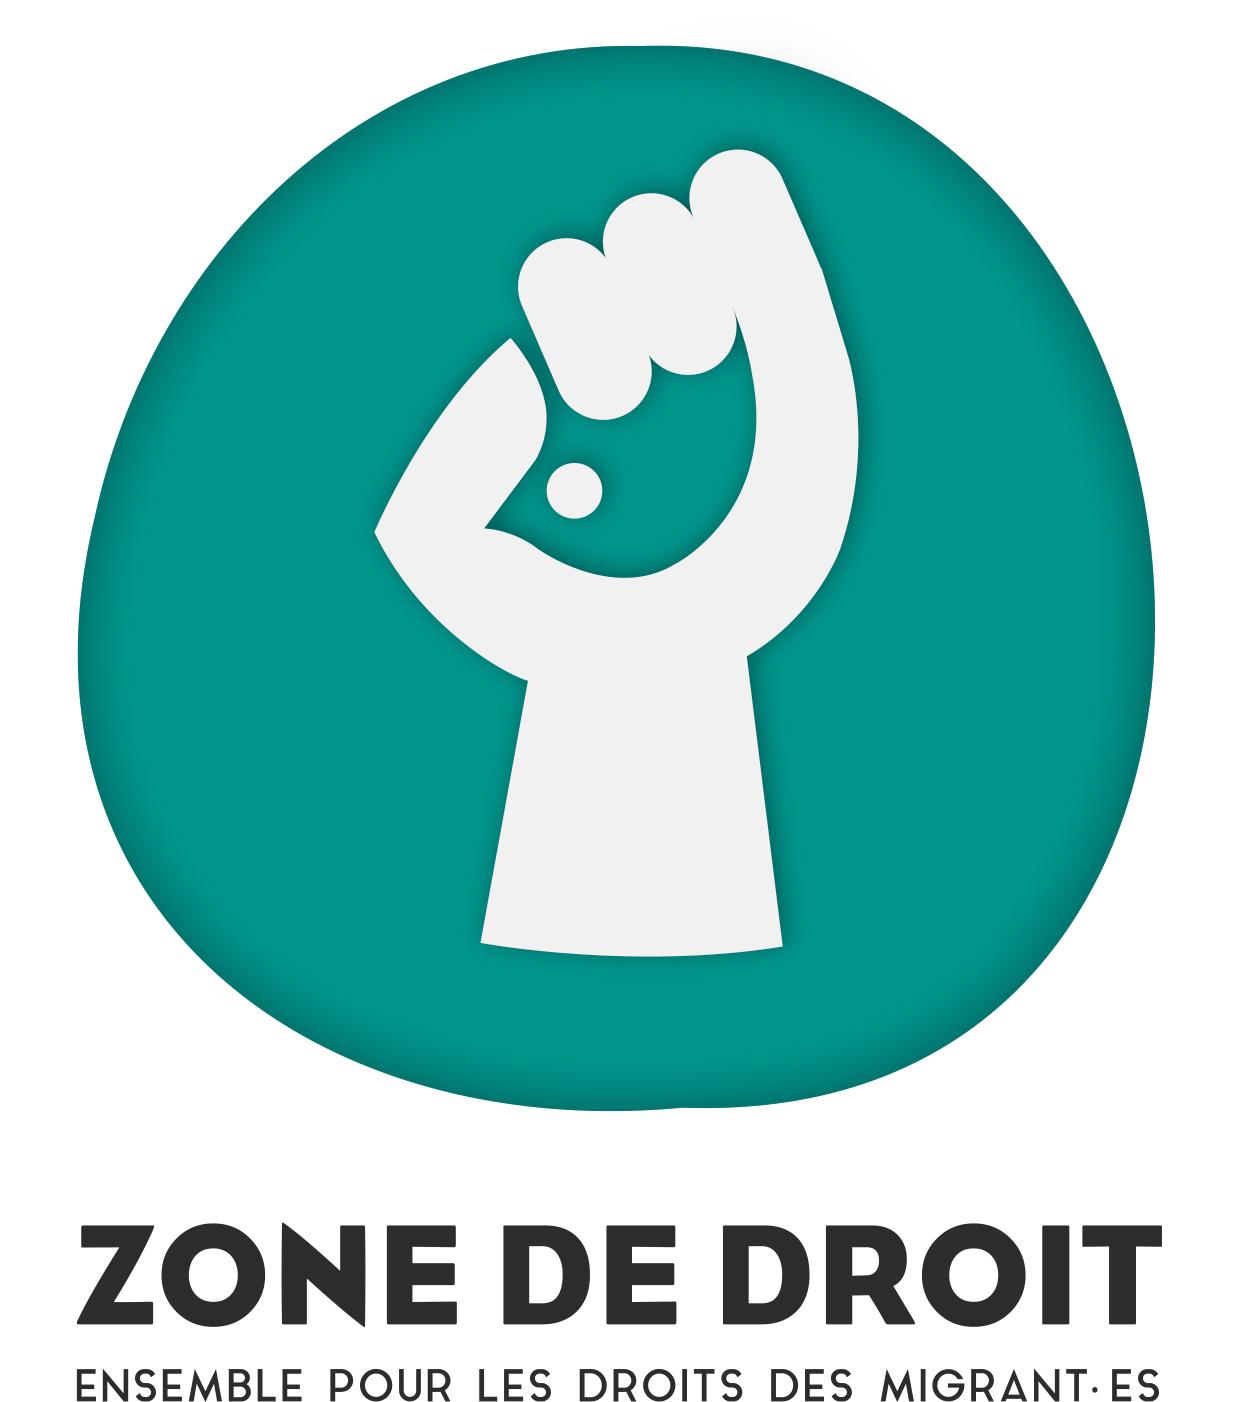 Zonededroit logo defonce turquoise